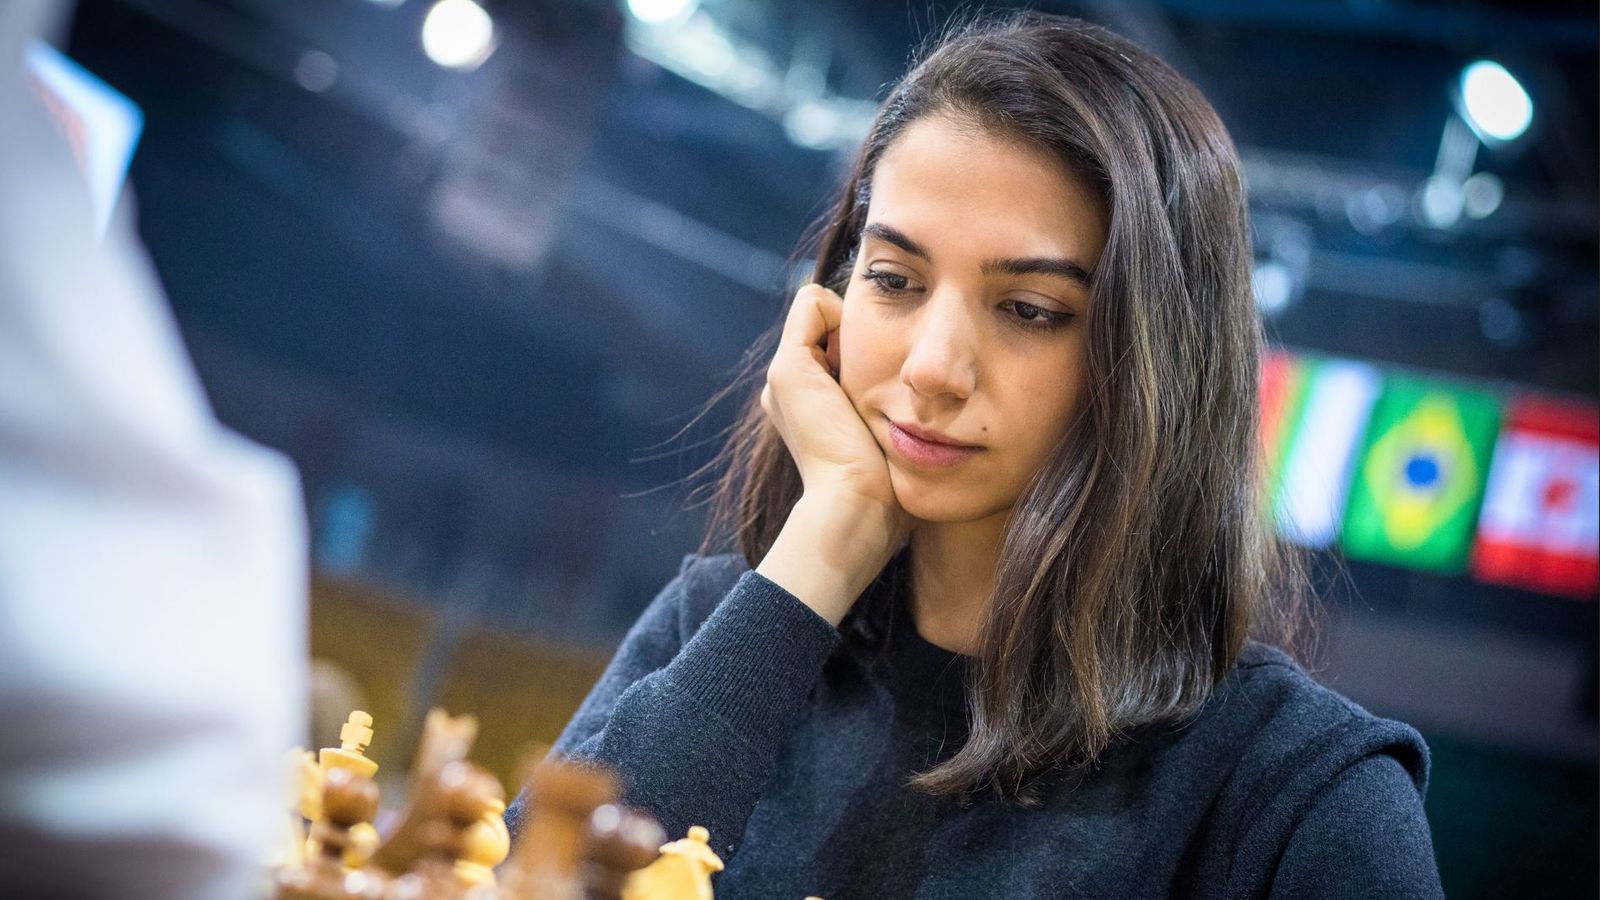 Iranian chess players Sara Khadem and Atousa Pourkashiyan compete in international tournament without hijab